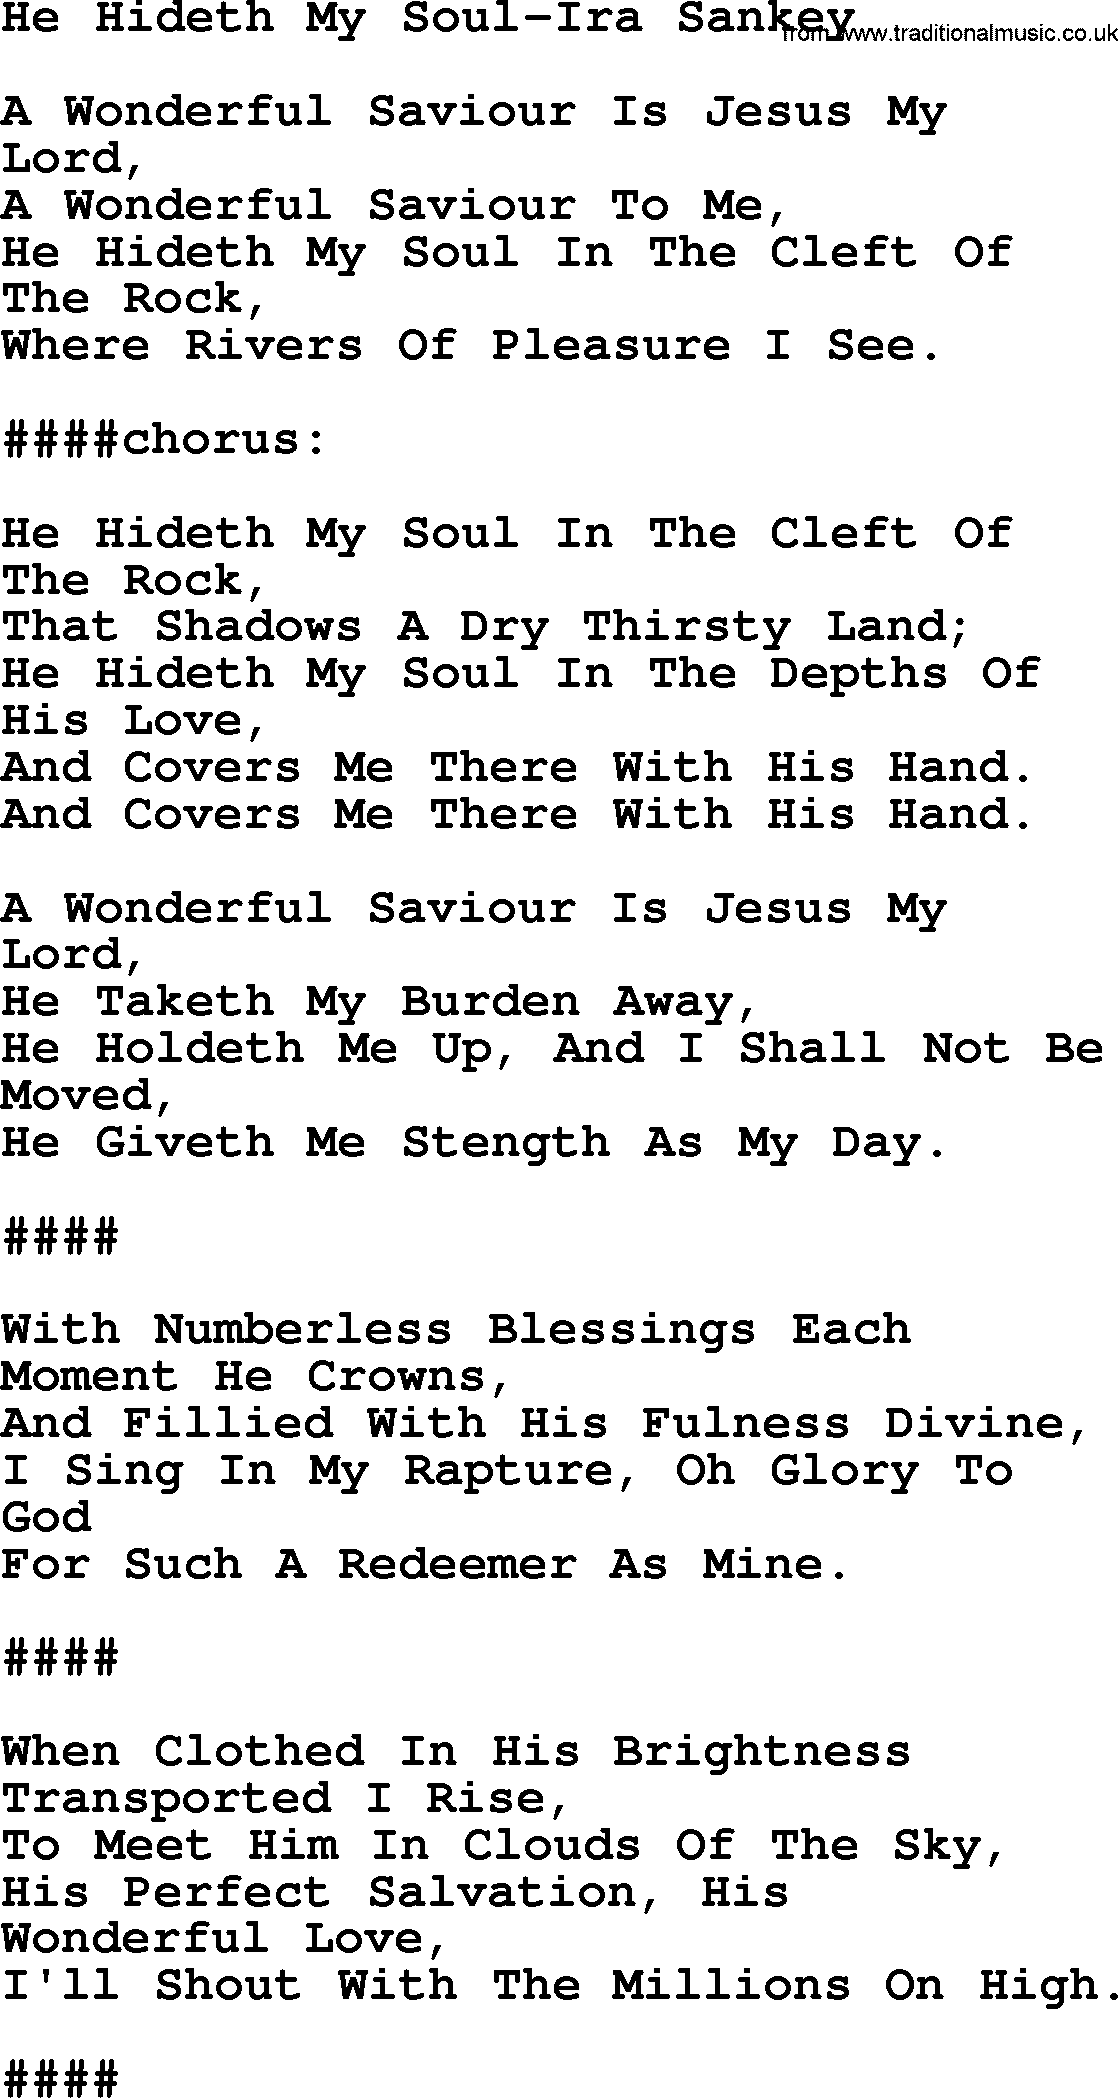 Ira Sankey hymn: He Hideth My Soul-Ira Sankey, lyrics